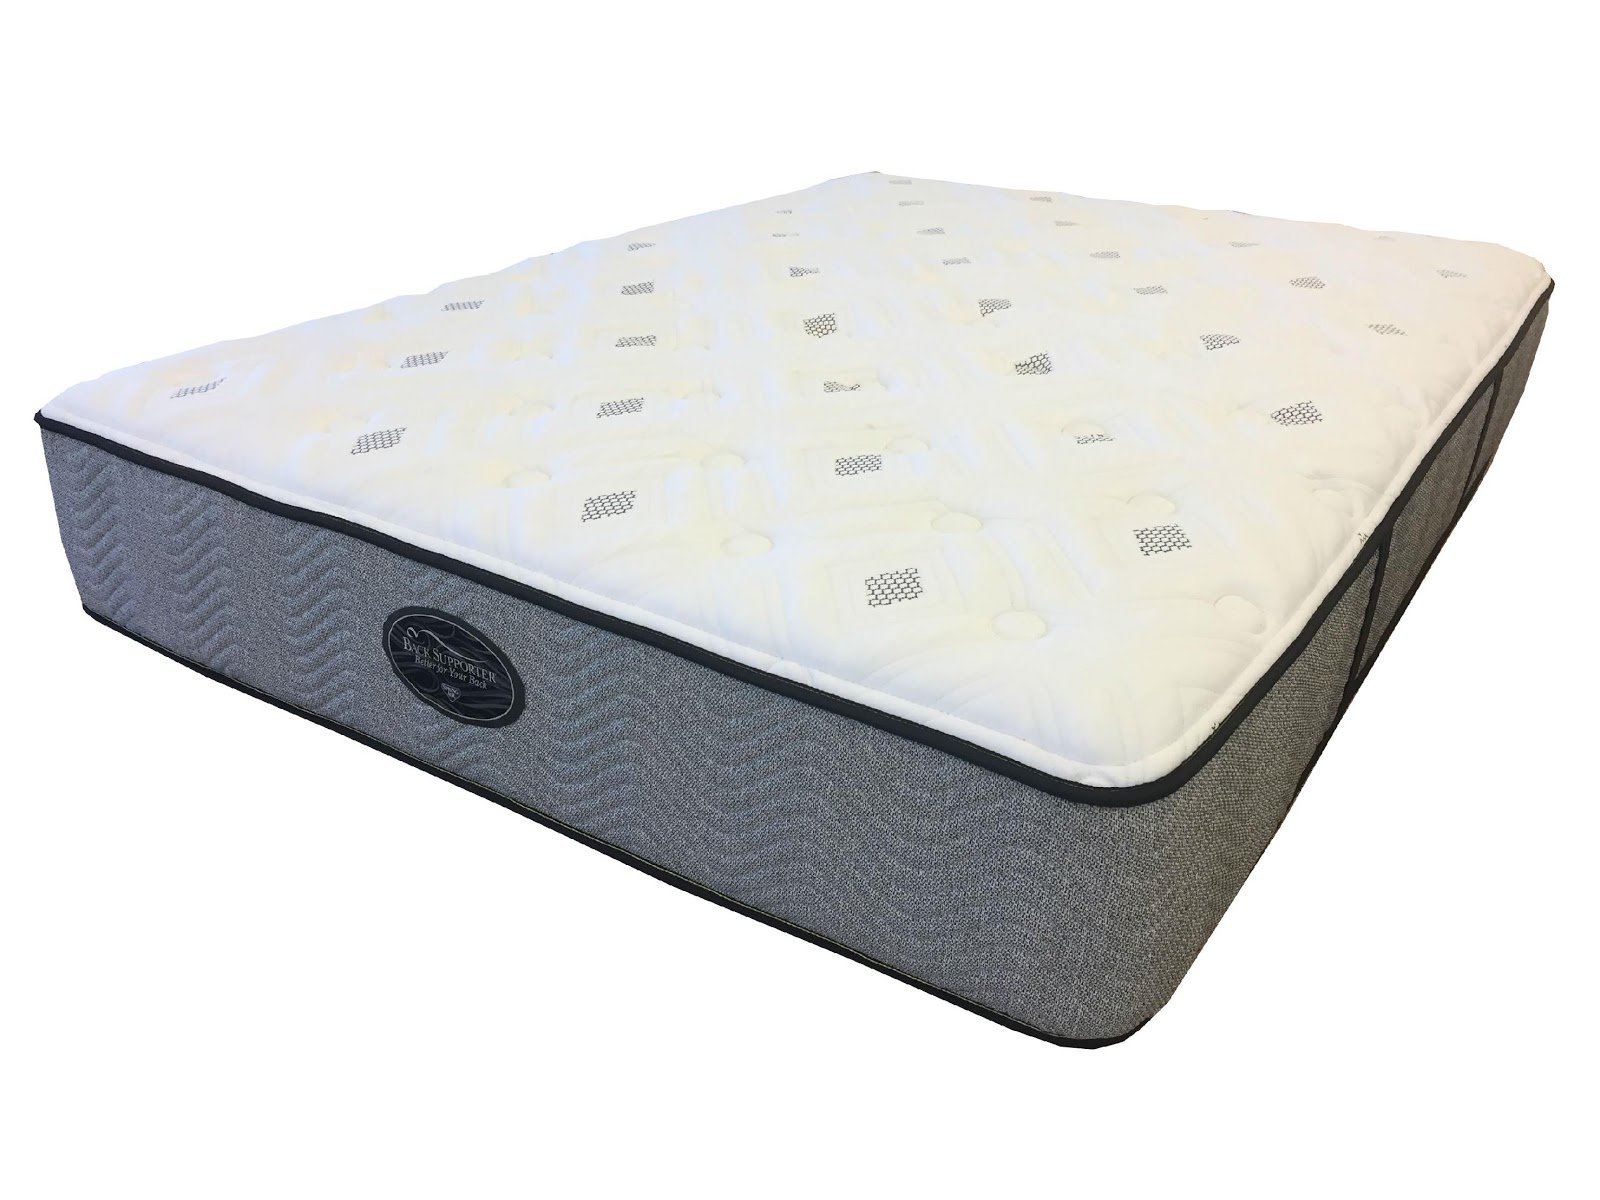 super firm mattress for 500 lb person